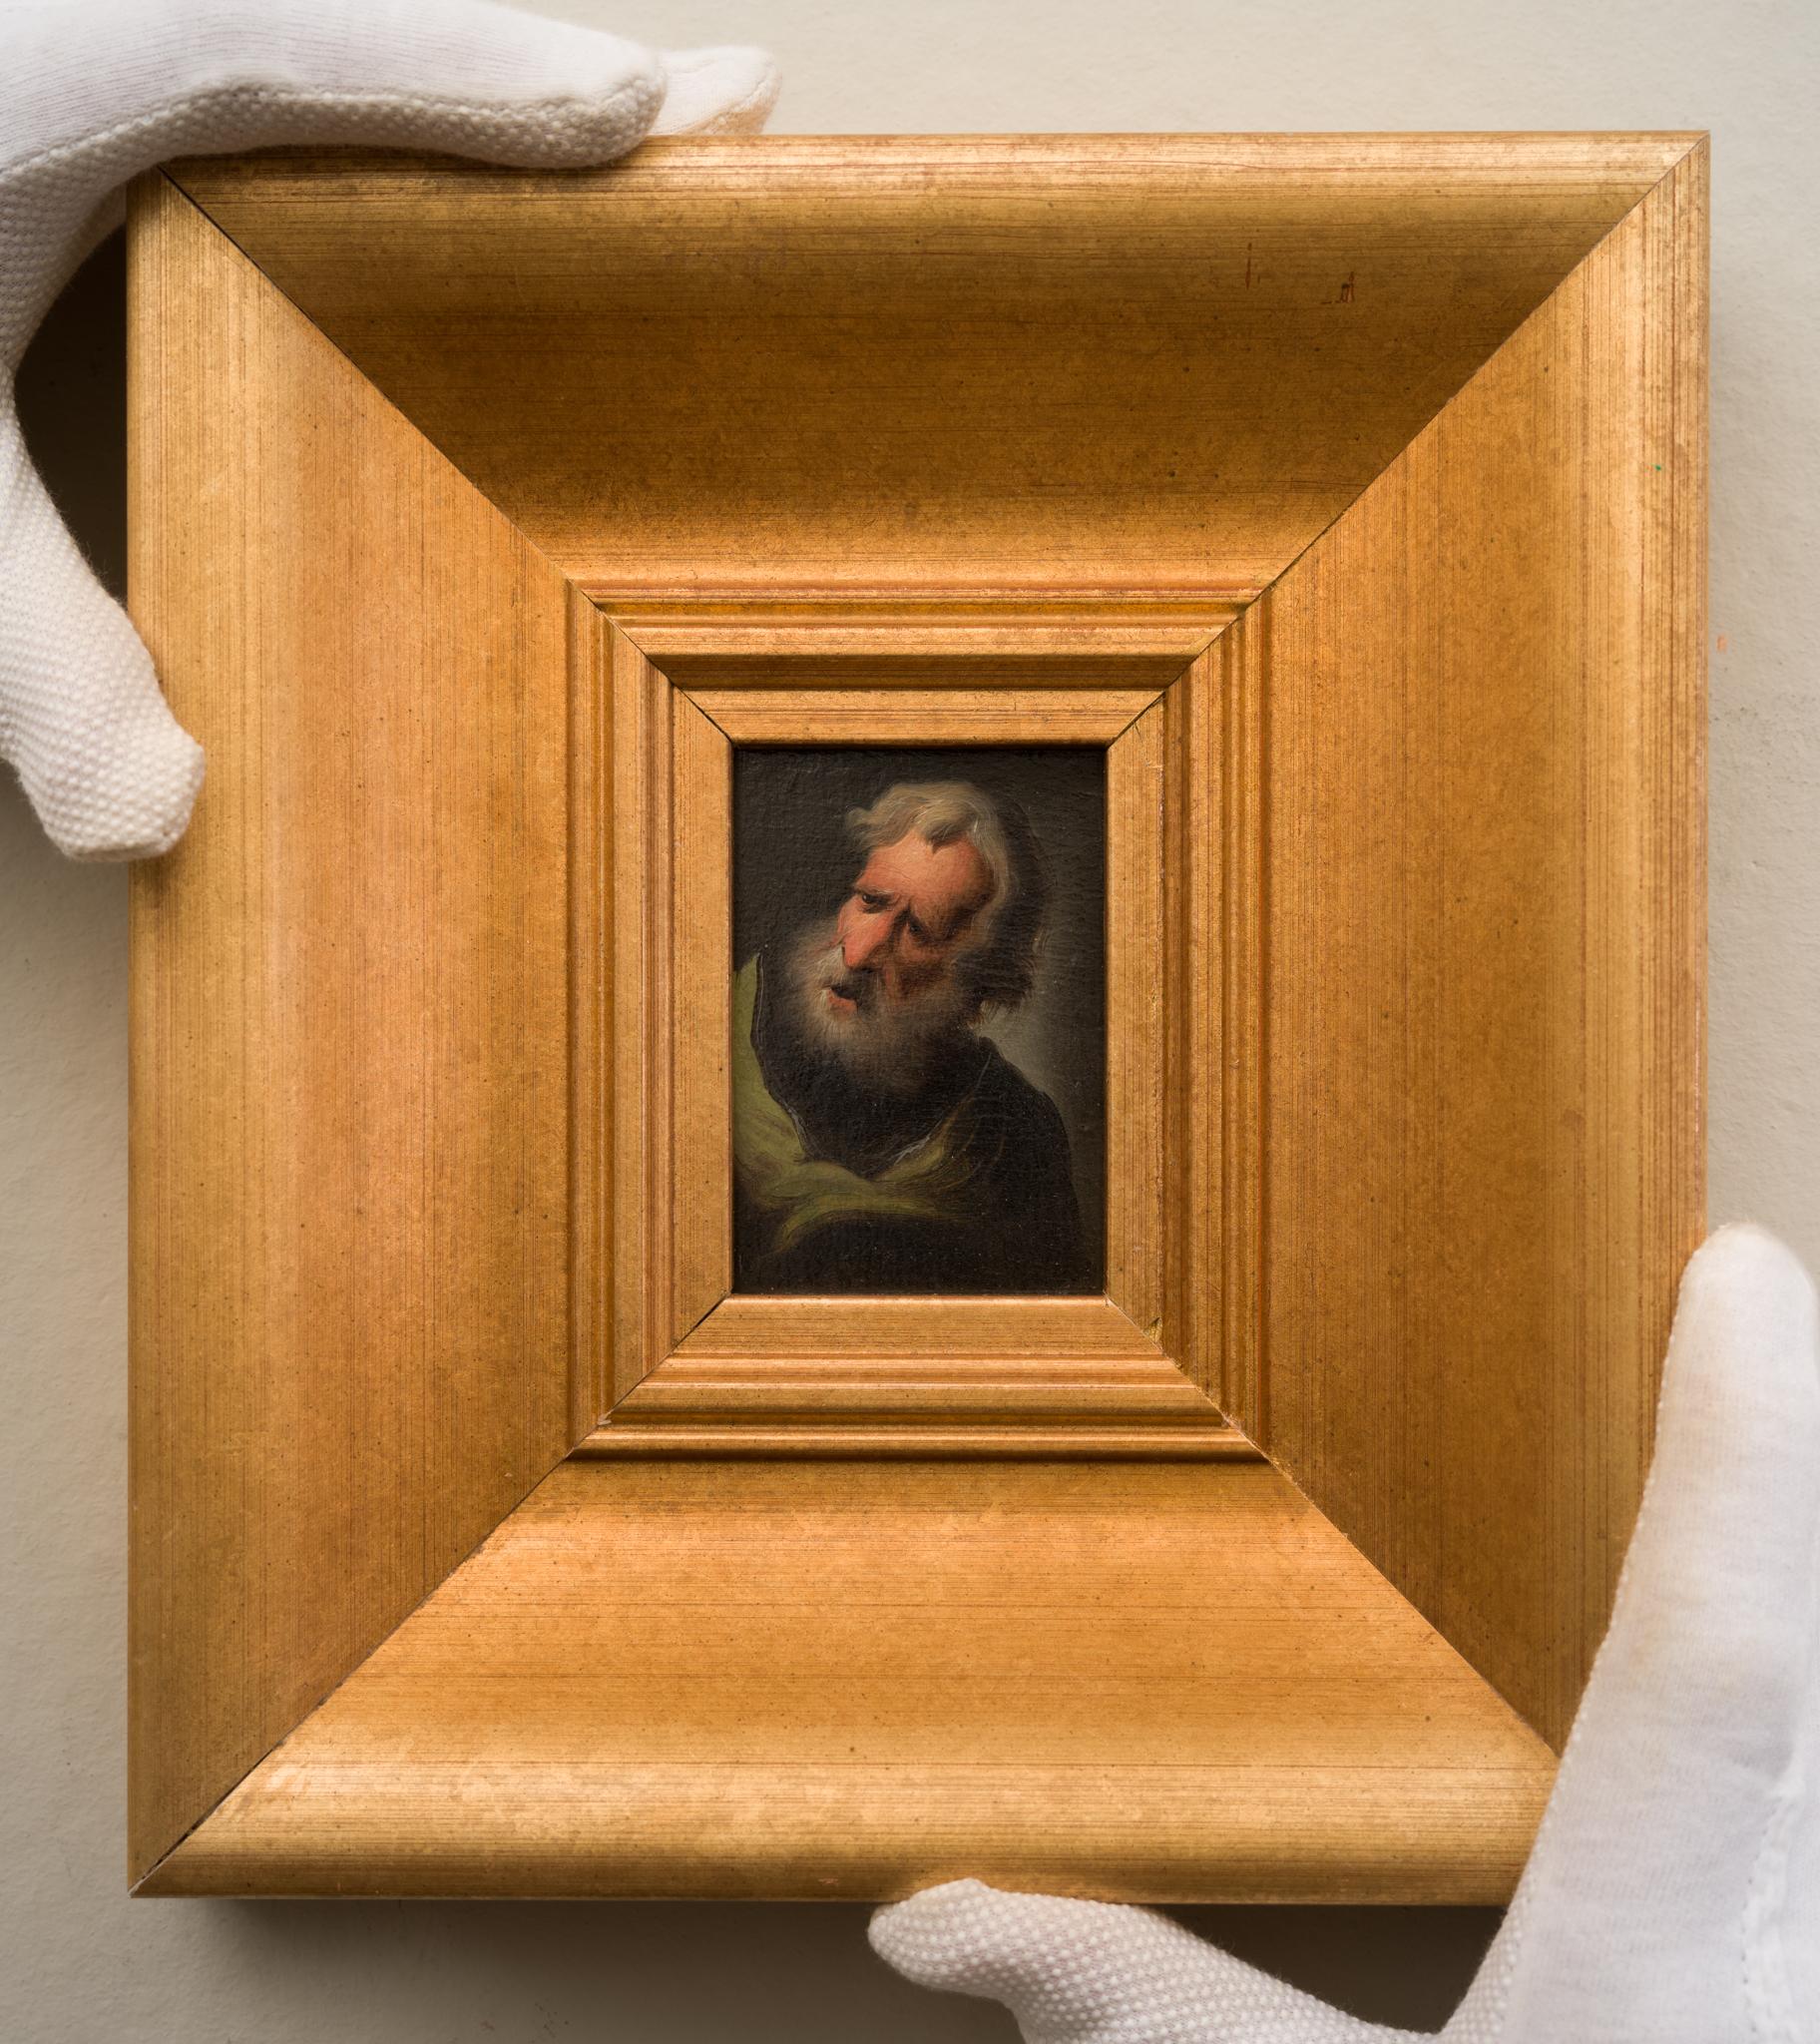  The Traveler's Treasure: A Miniature Portrait - Realist Painting by Christian Wilhelm Ernst Dietrich